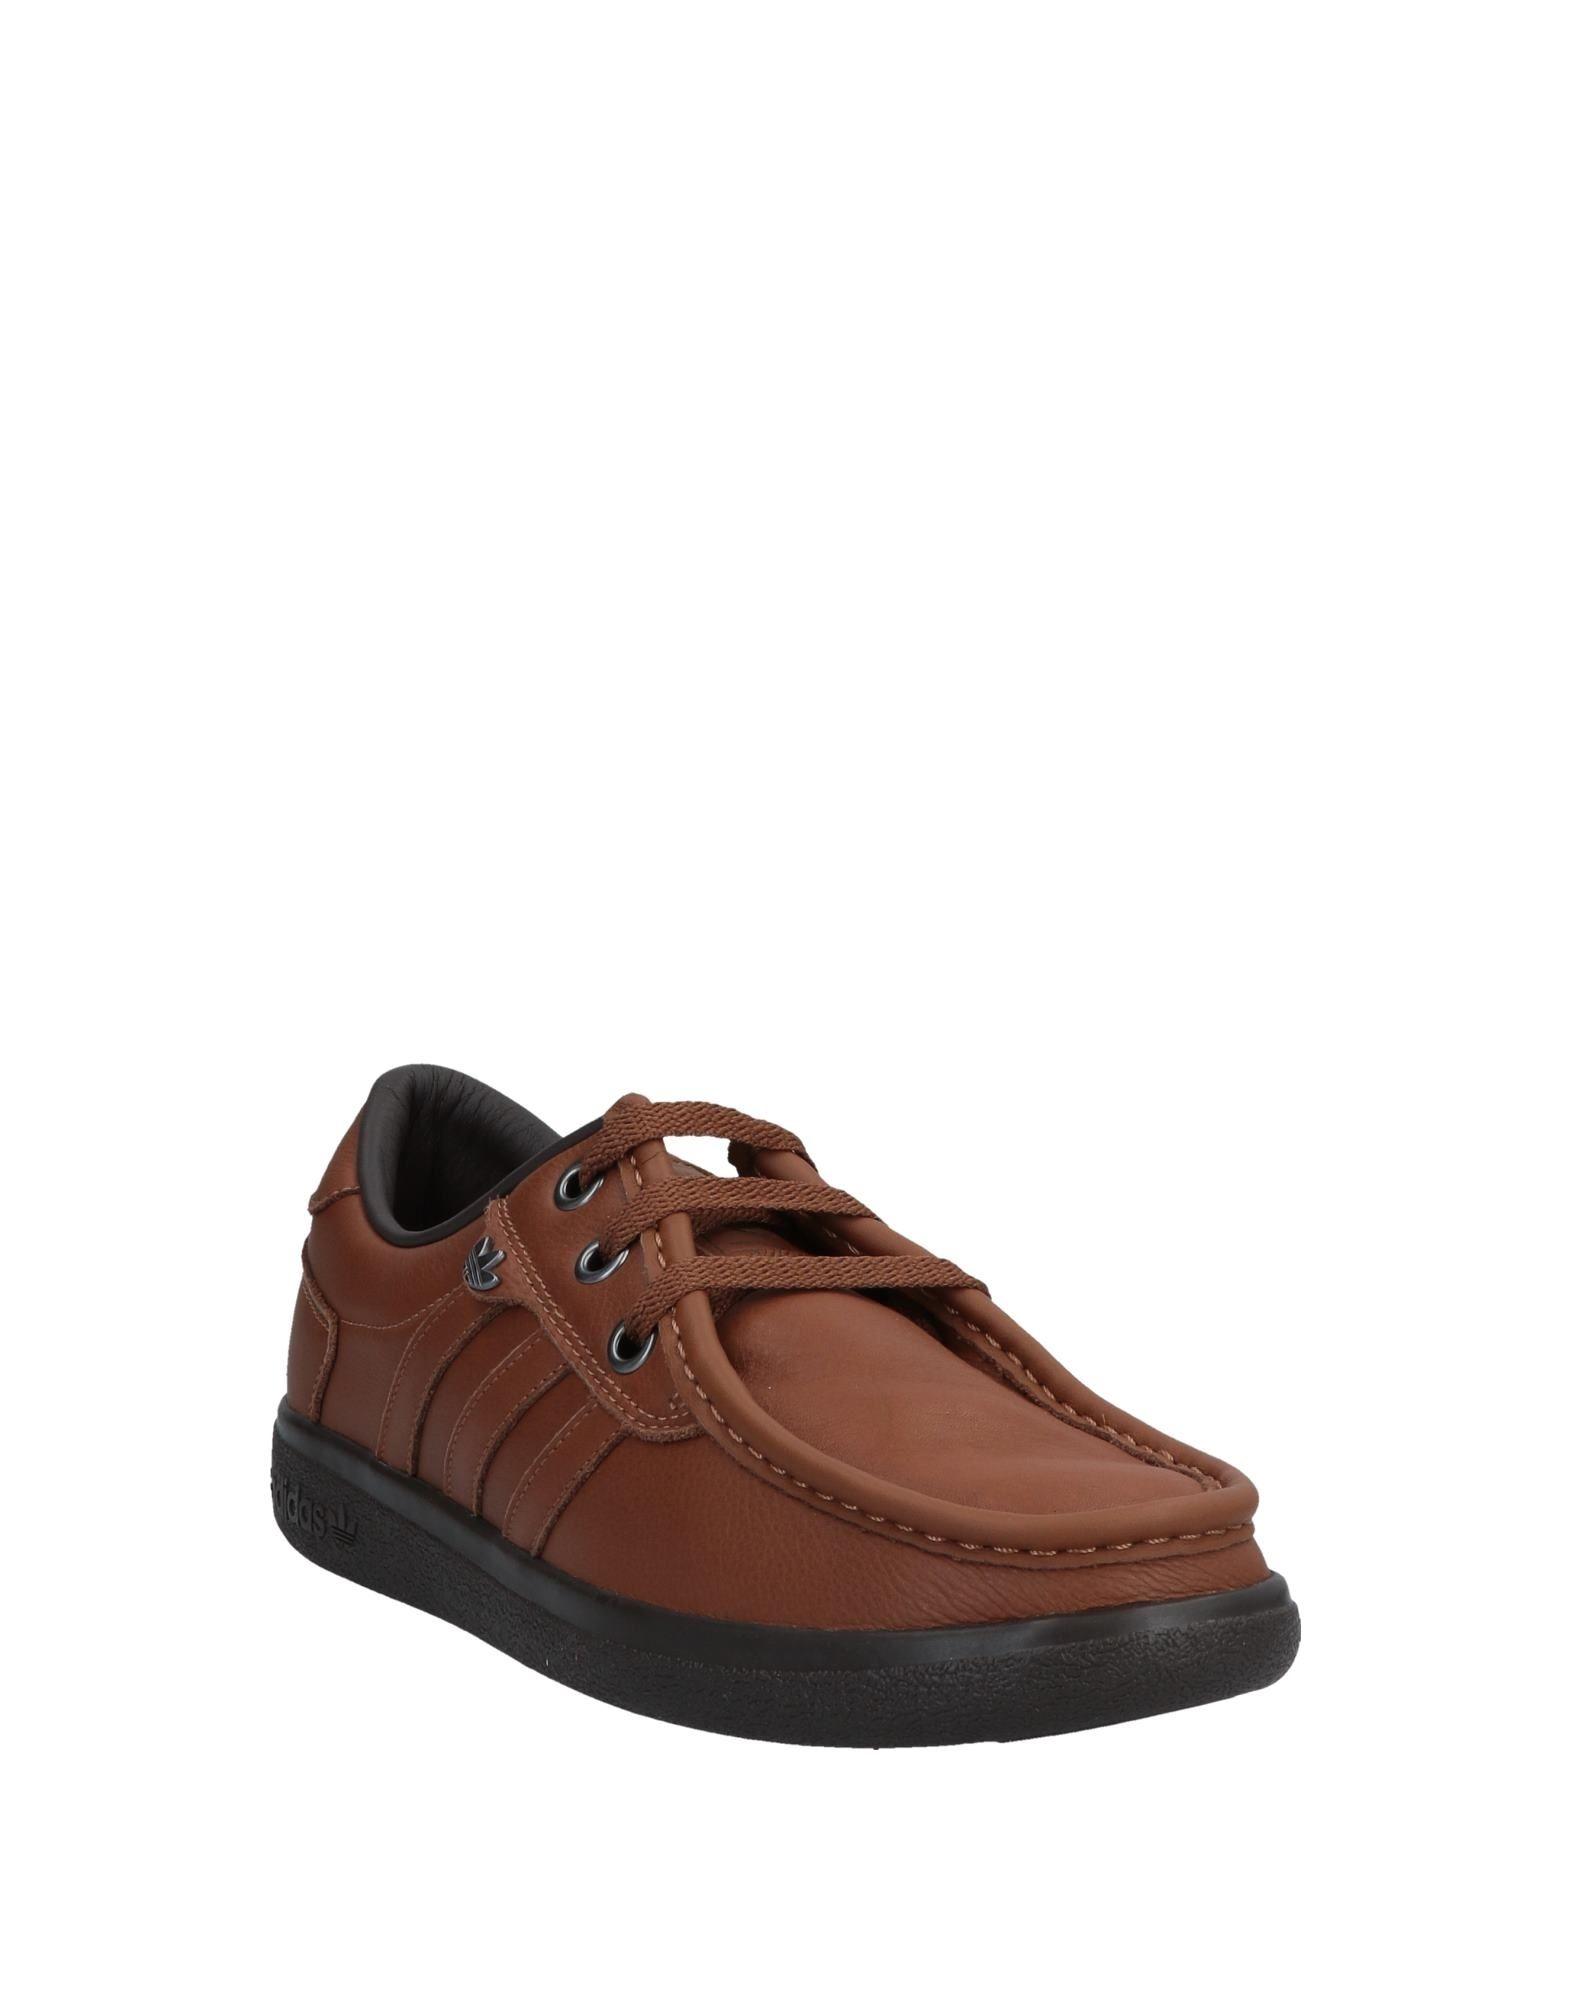 adidas Originals Loafer in Brown for Men | Lyst